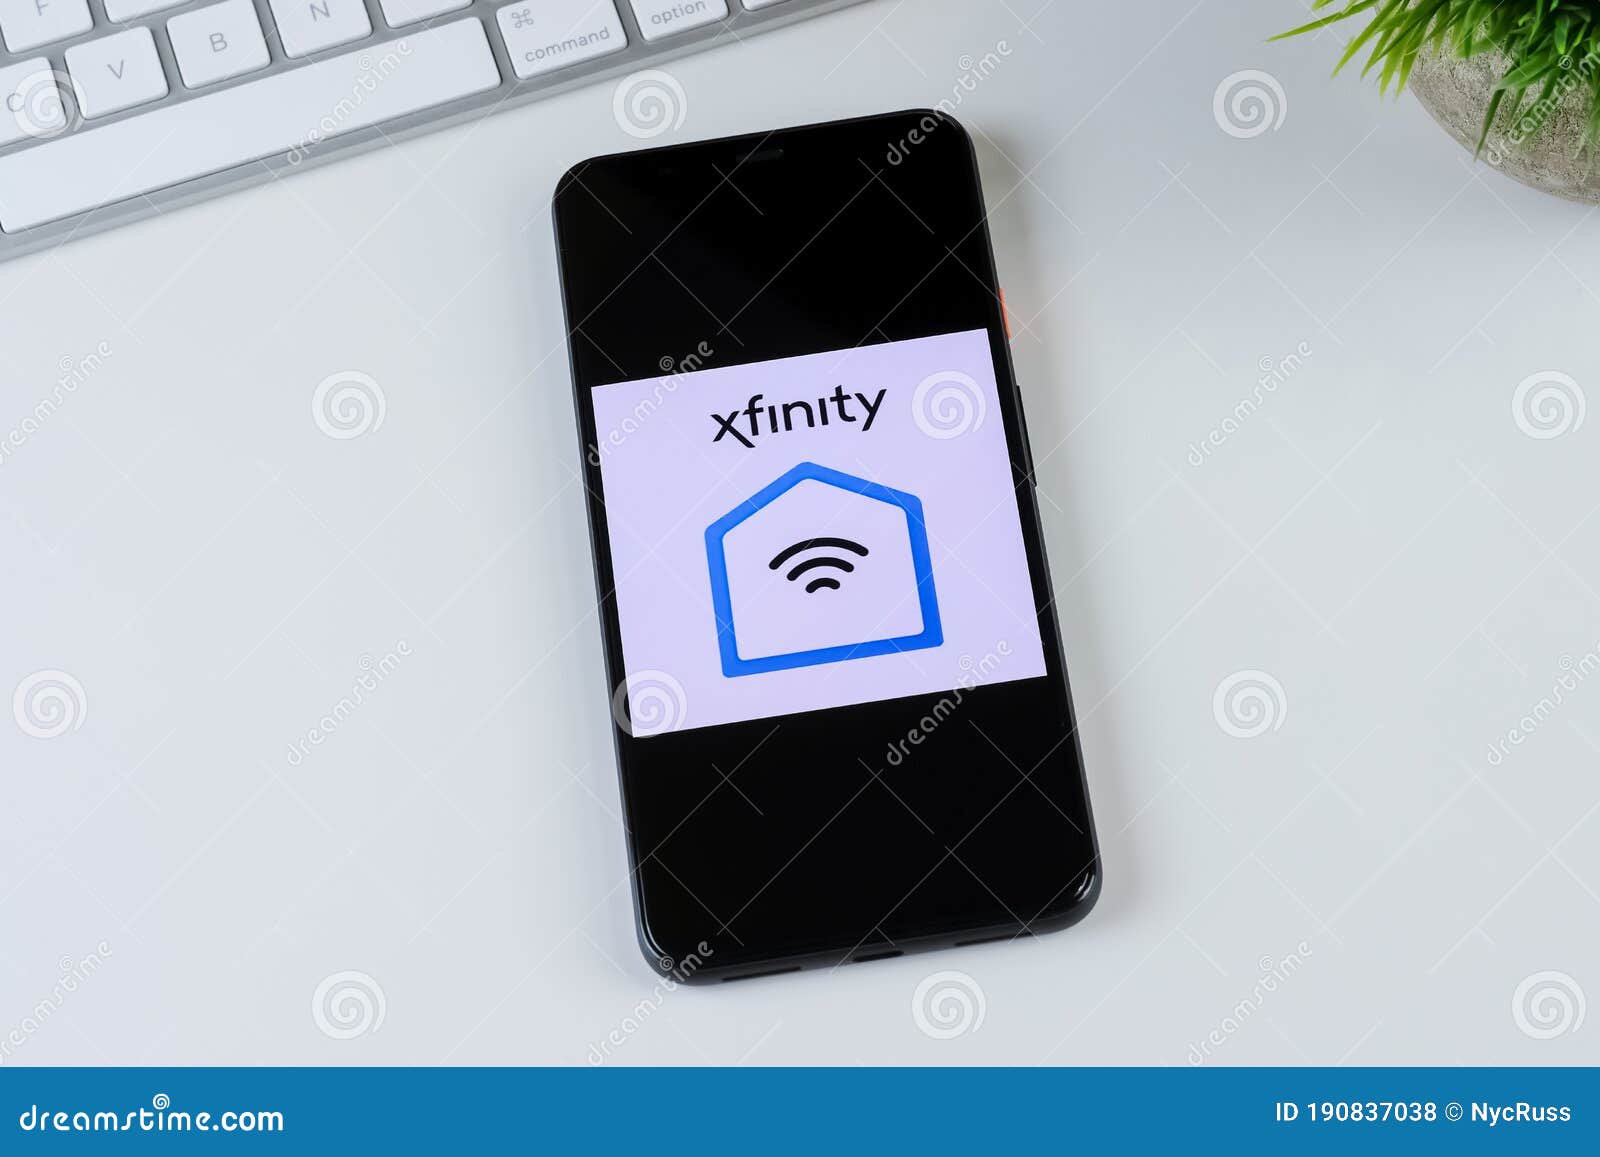 Xfinity Xfi App Logo On A Smartphone Screen Editorial Stock Photo Image Of Desk Xfinity 190837038